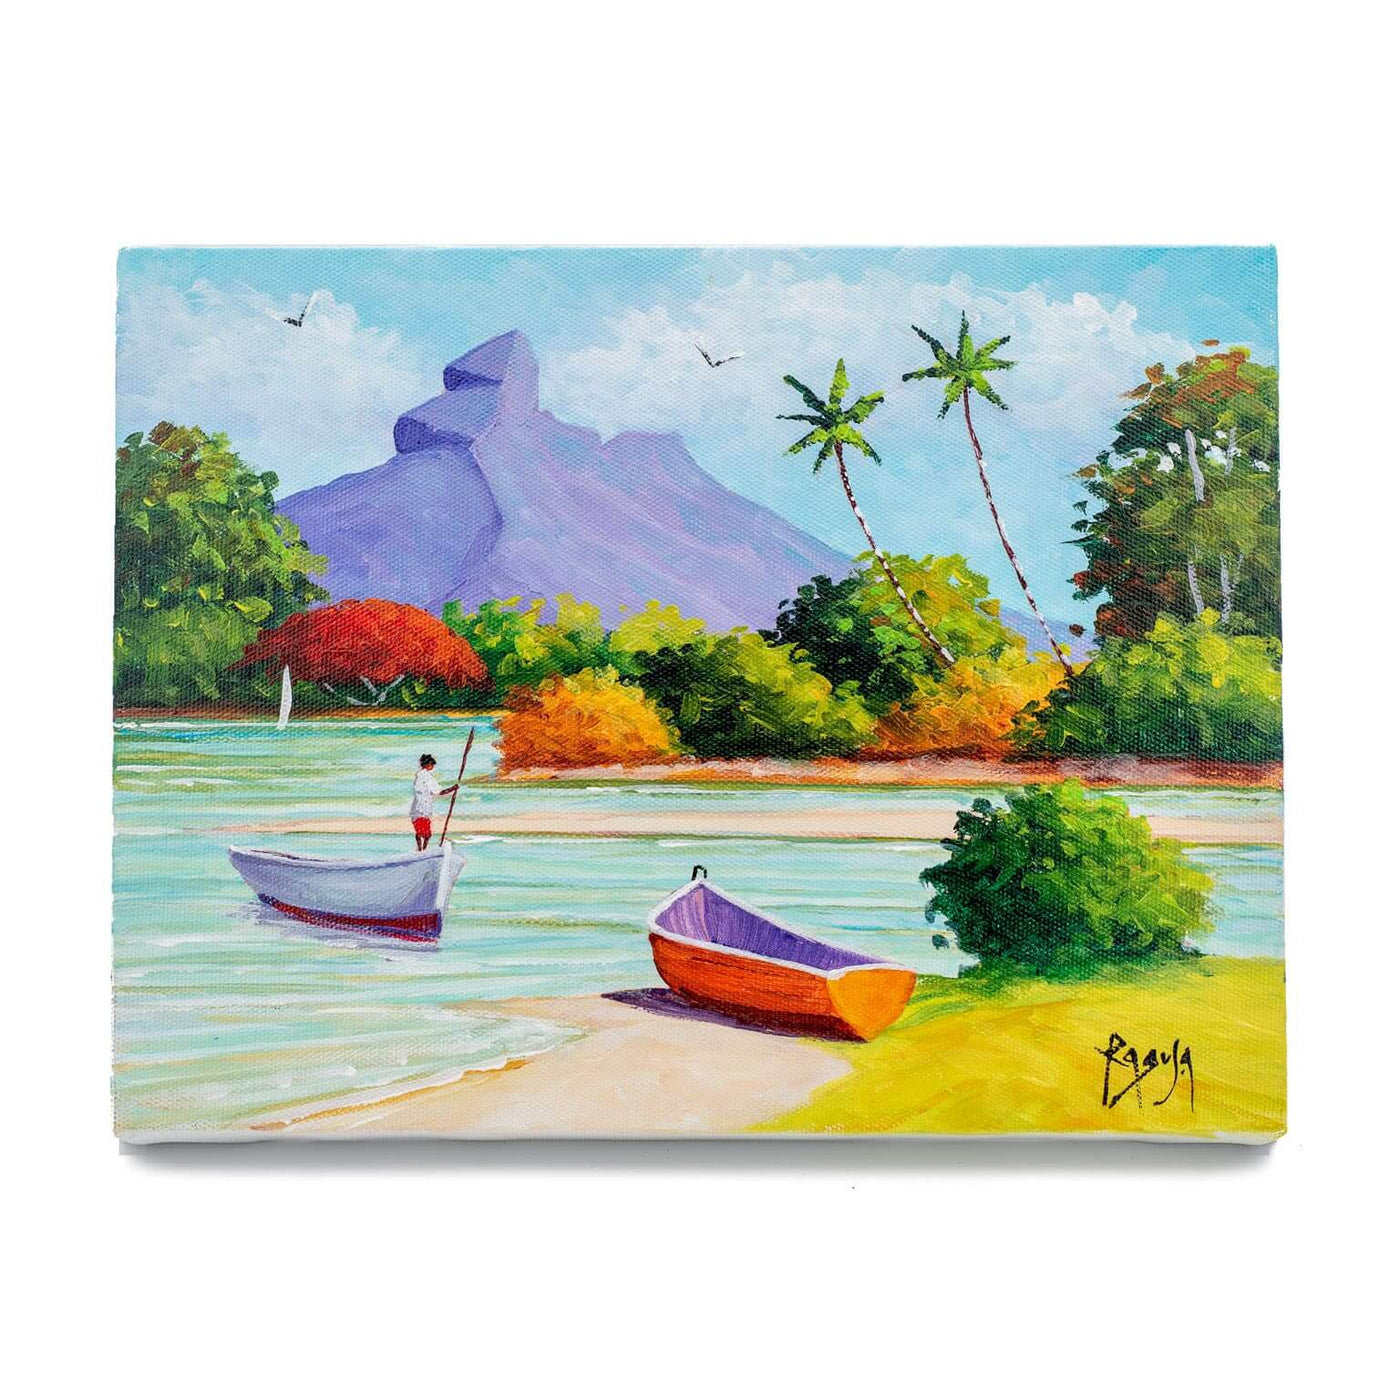 Mauritius-Authentic-HandMade-Painting-Pino Ragusa, "Montagne du Rempart"-DodoMarket